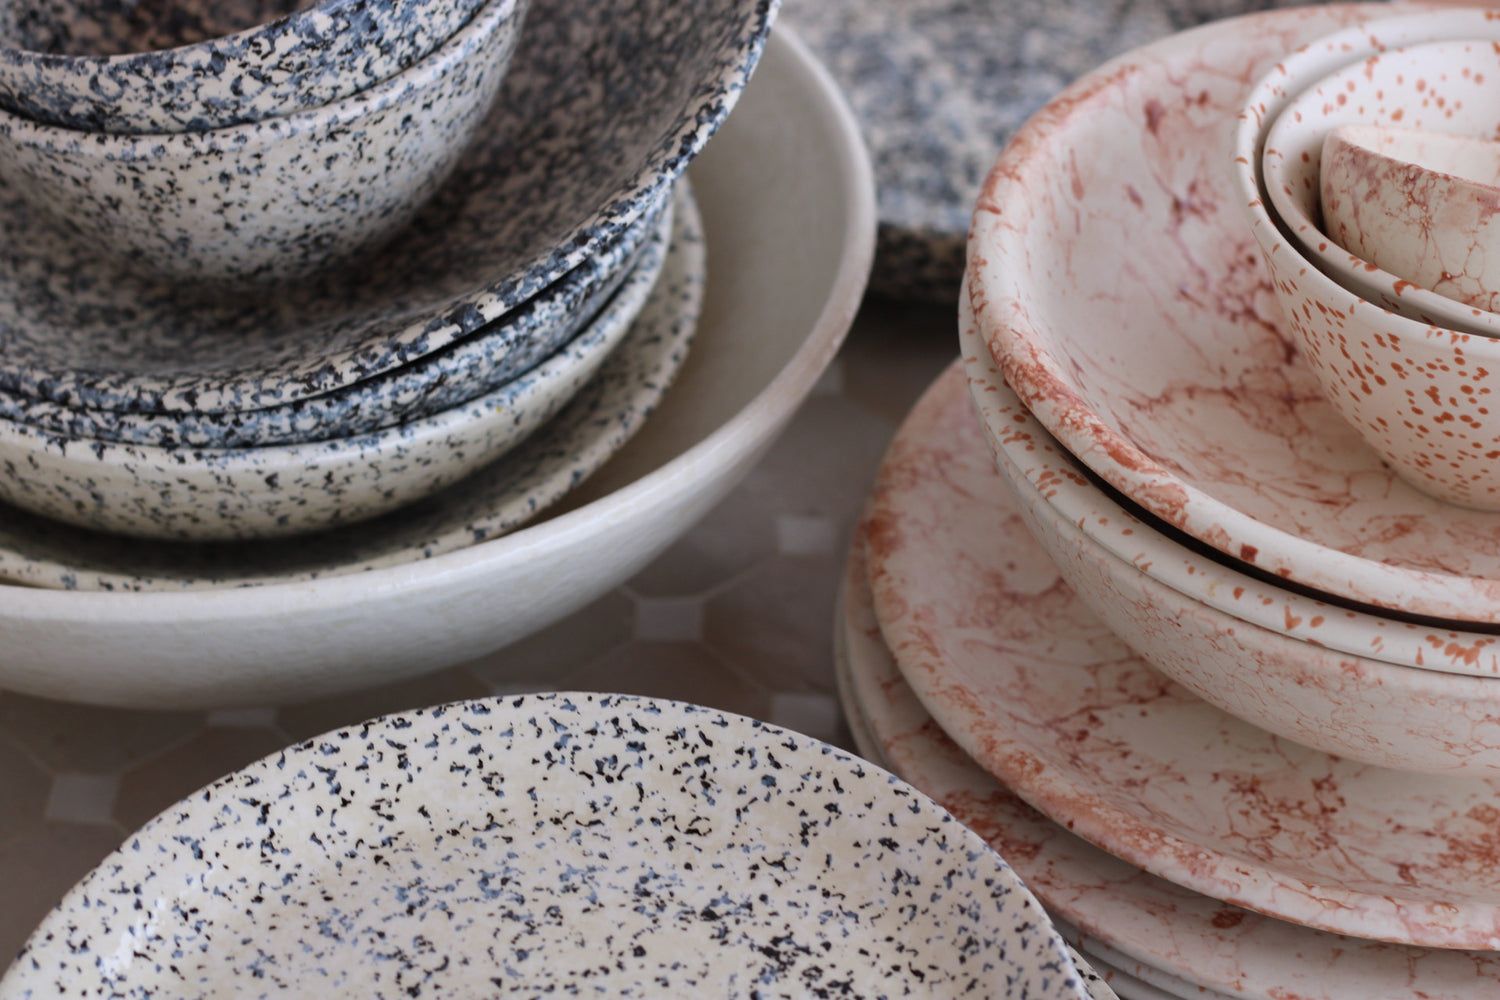 Familianna ceramics' commitment to sustainability and social responsibility